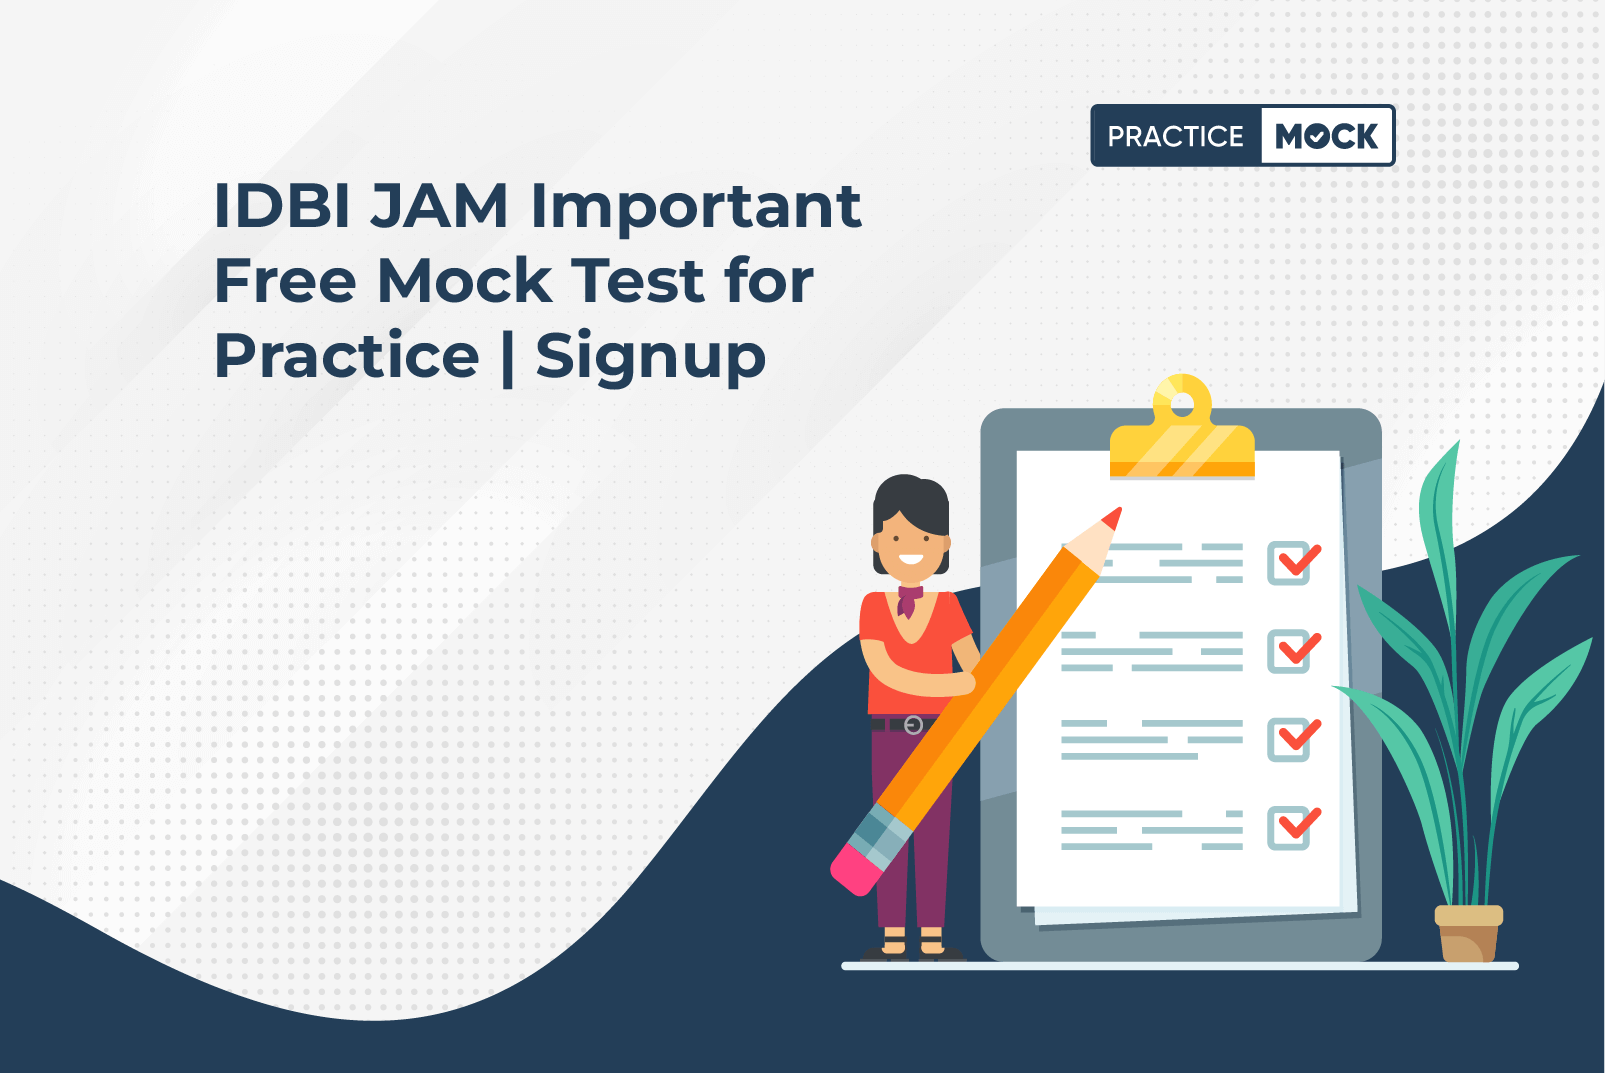 IDBI JAM Important Free Mock Test for Practice Signup